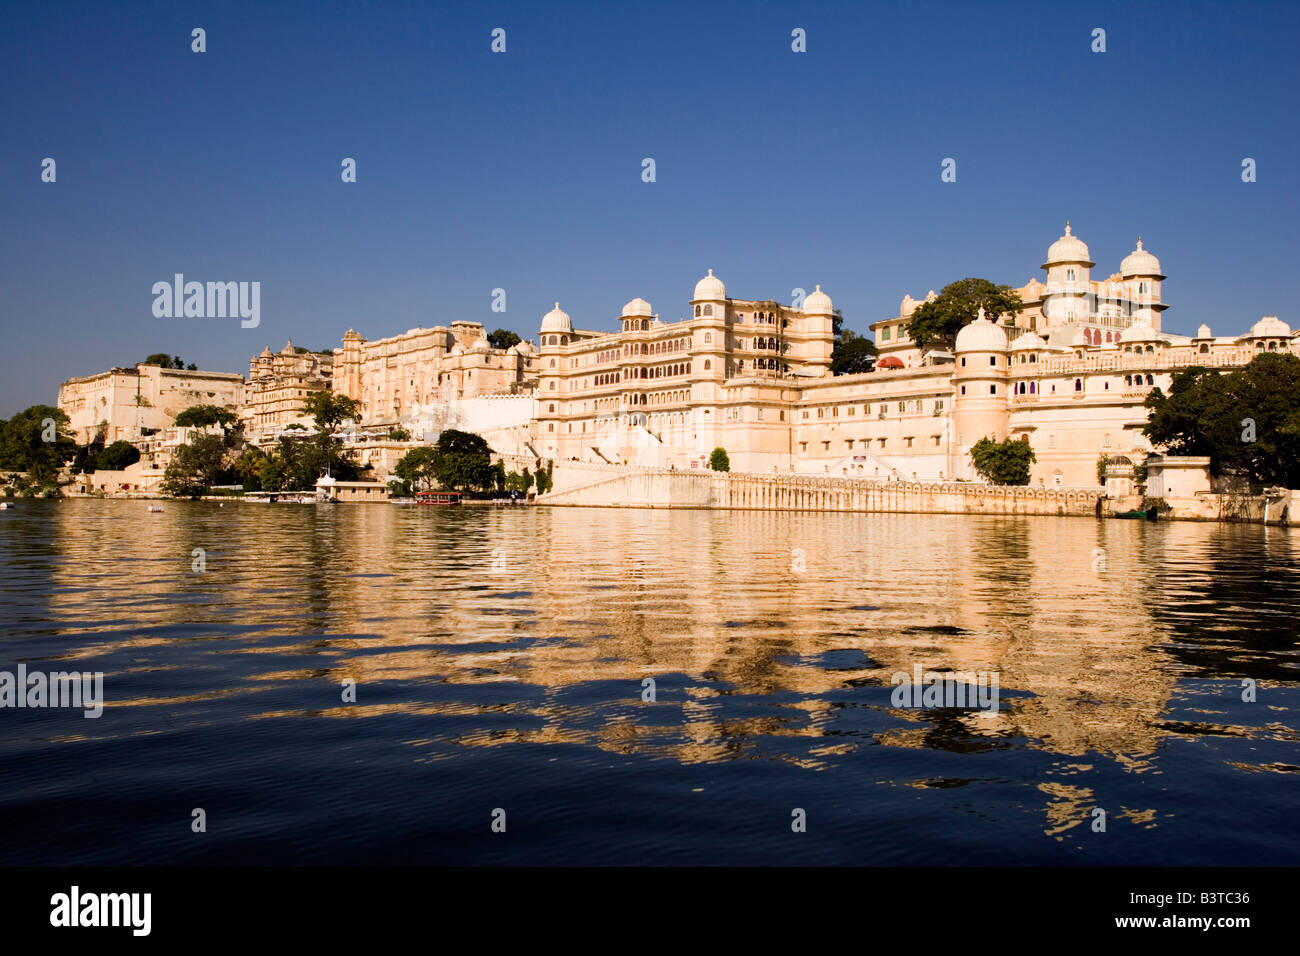 City Palace viewed from Lake Pichola, Udaipur, Rajasthan, India Stock Photo